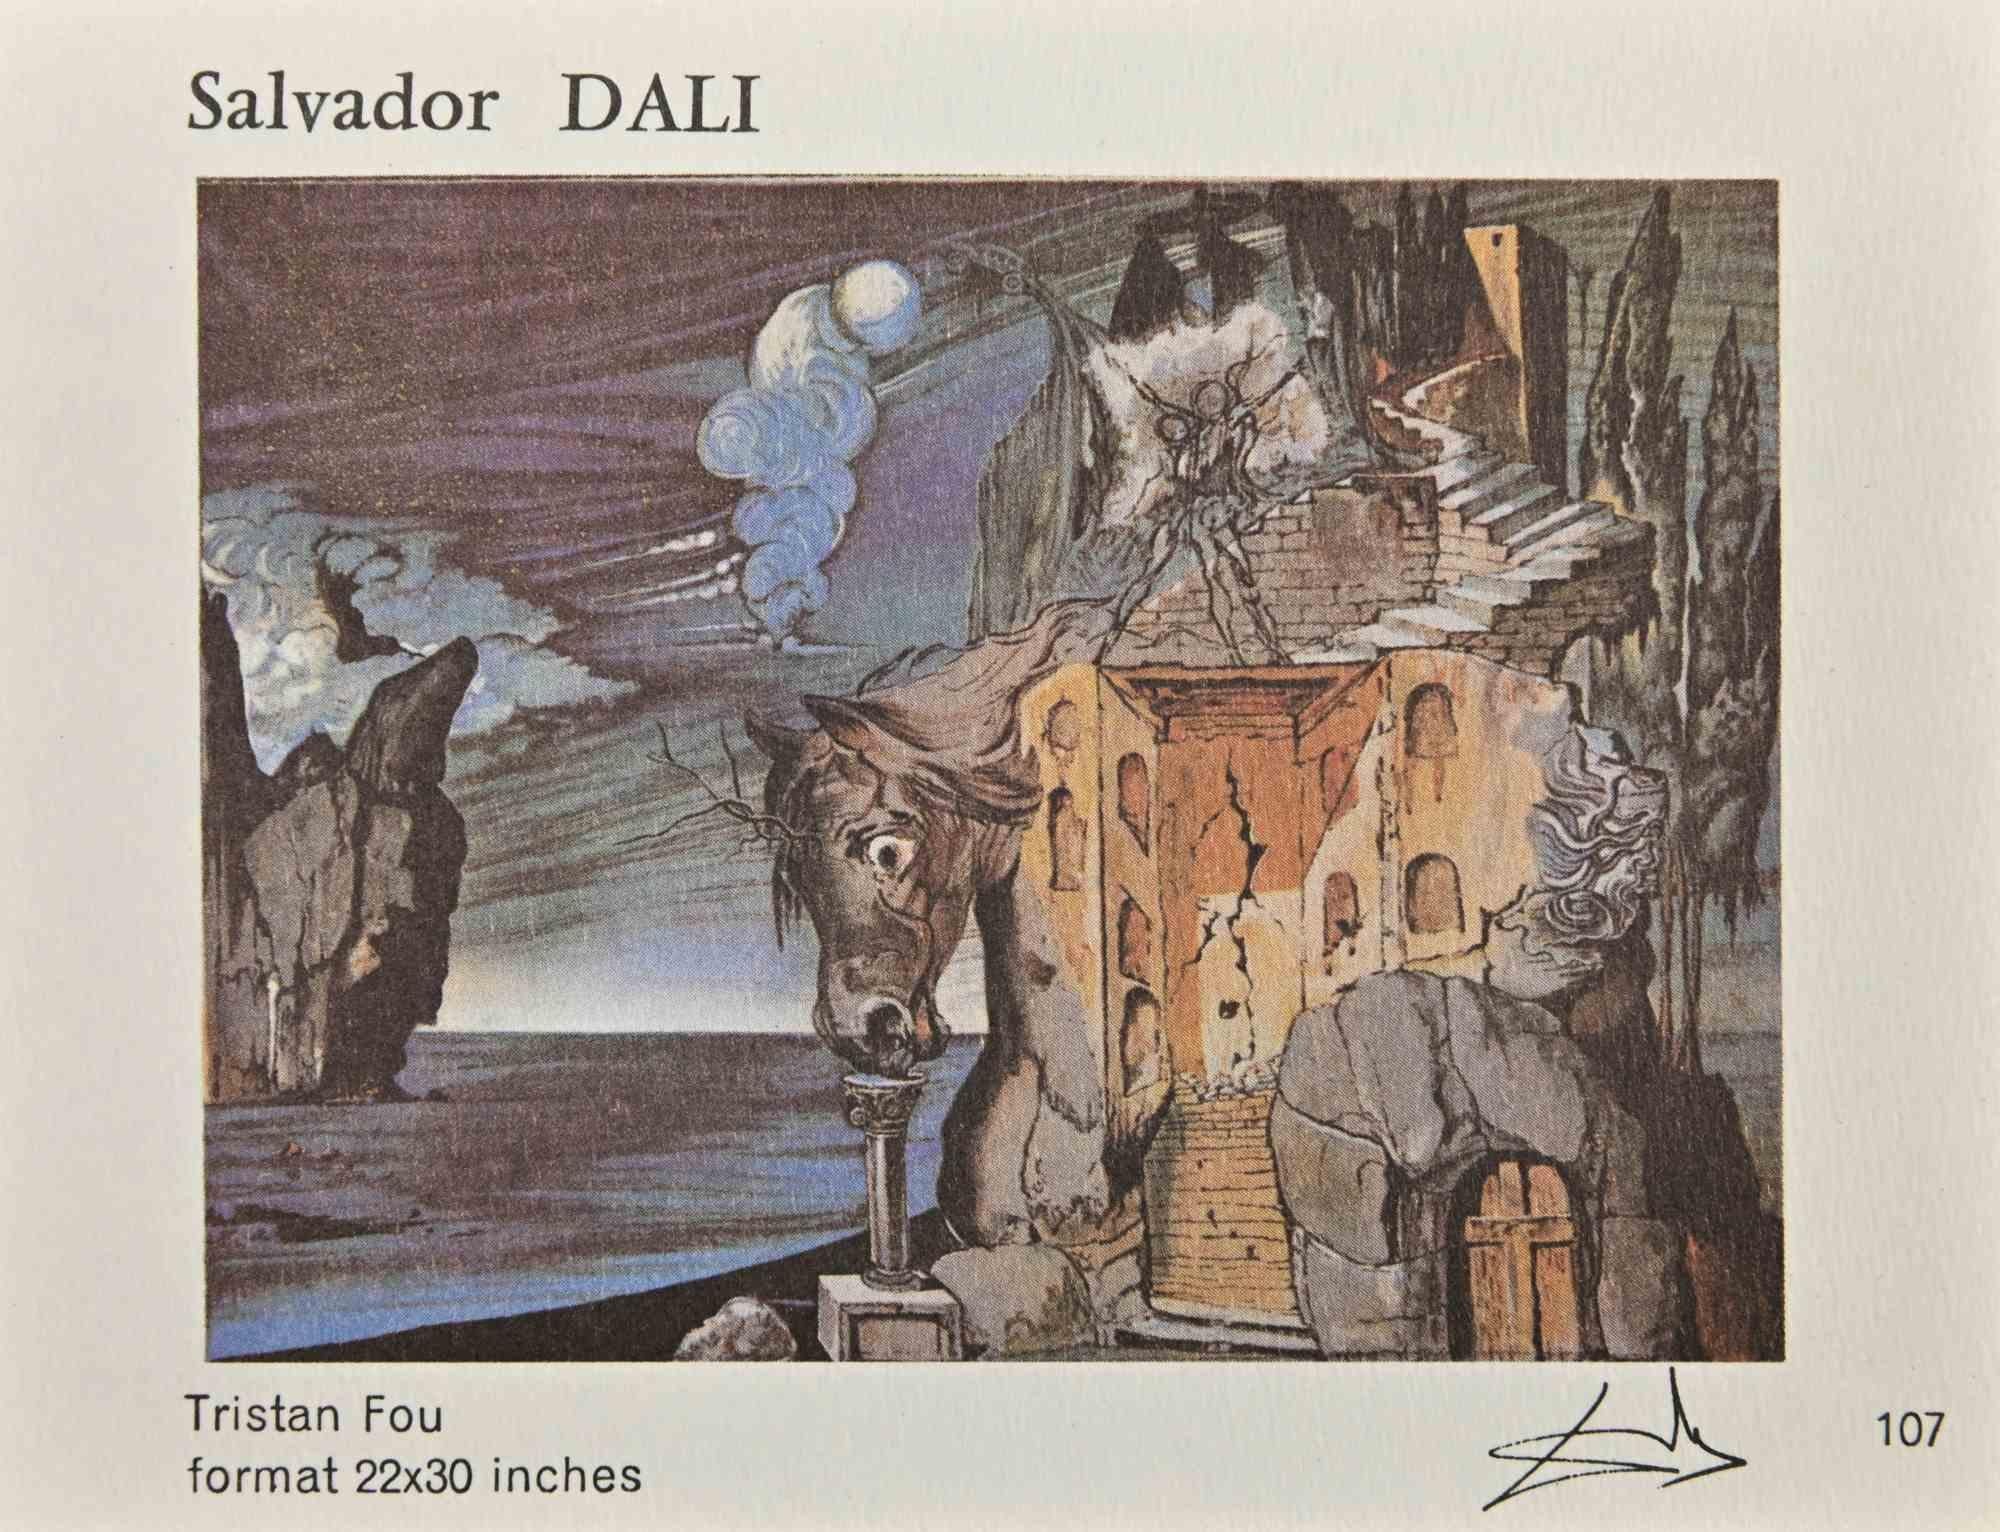 Collection of Vintage Cards After Salvador Dalì - 1980s - Surrealist Print by Salvador Dalí